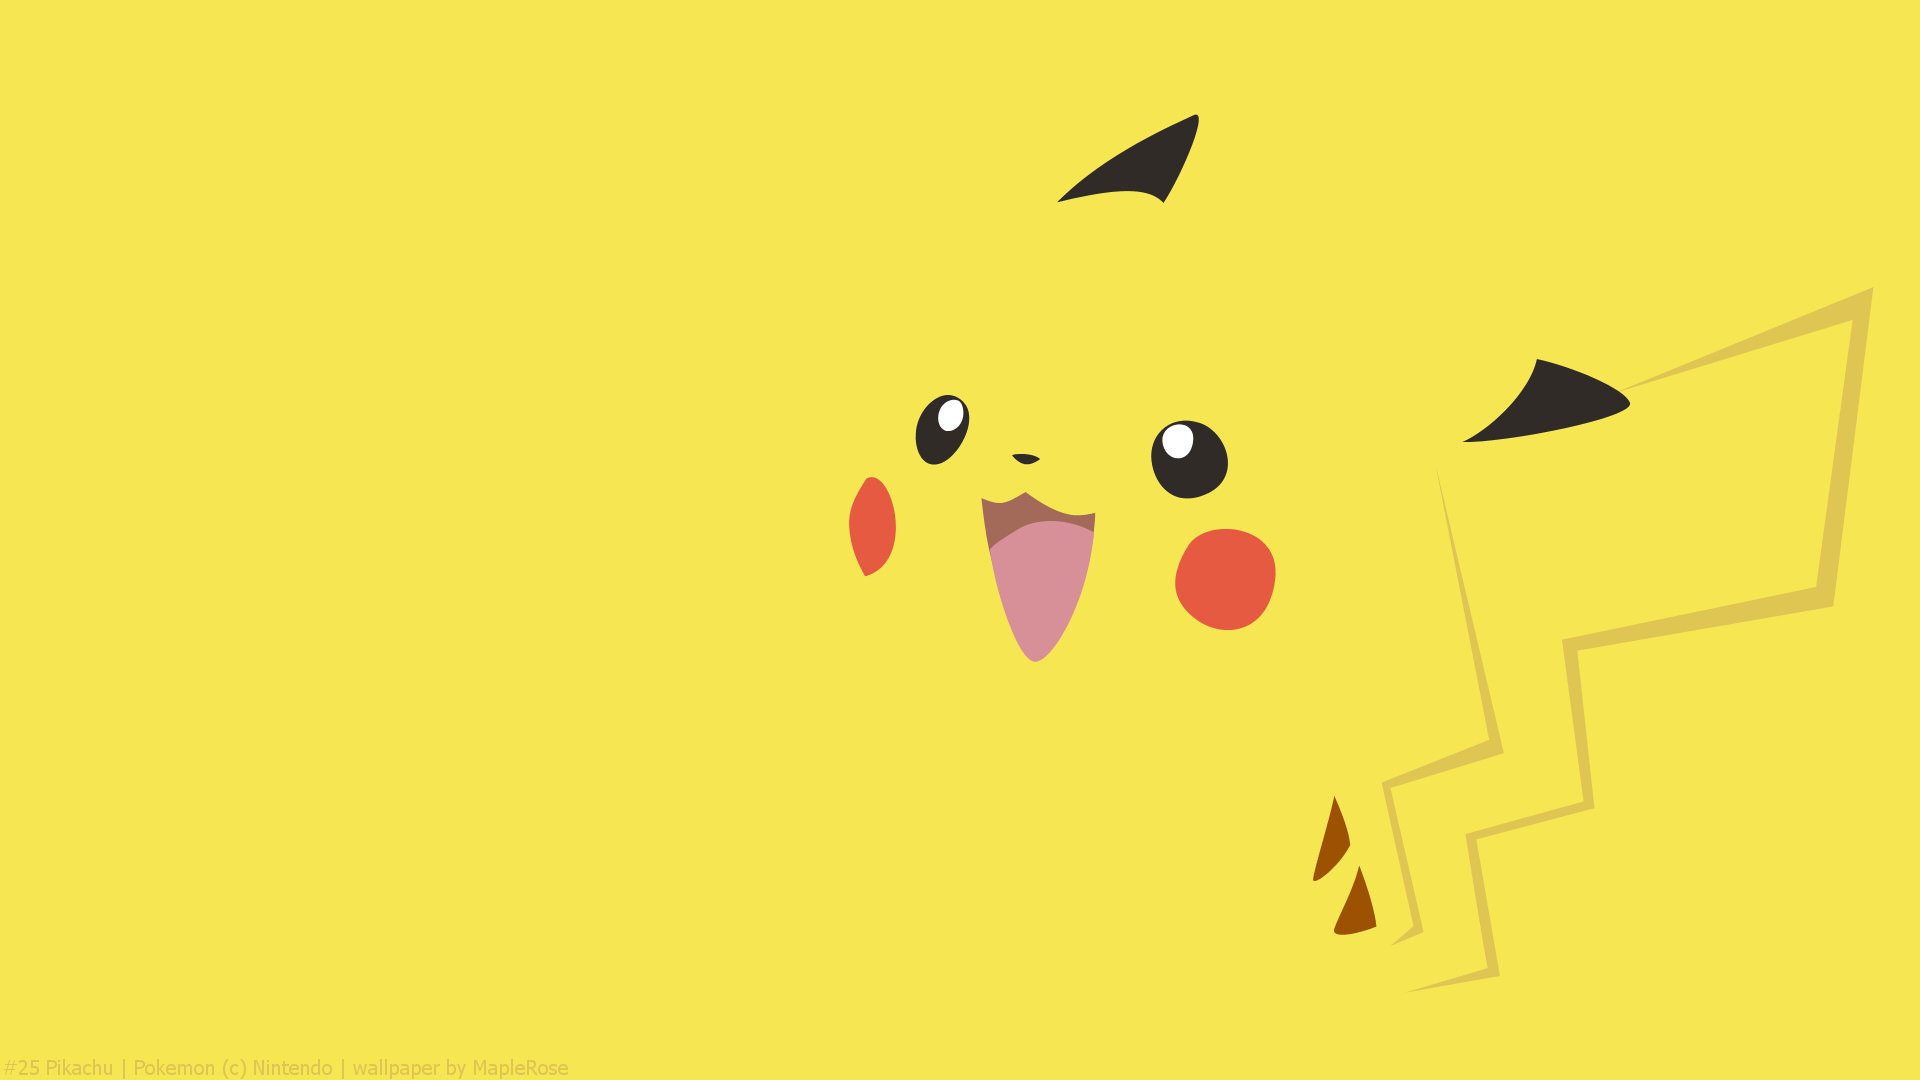 75+] Pokemon Pikachu Wallpaper - WallpaperSafari